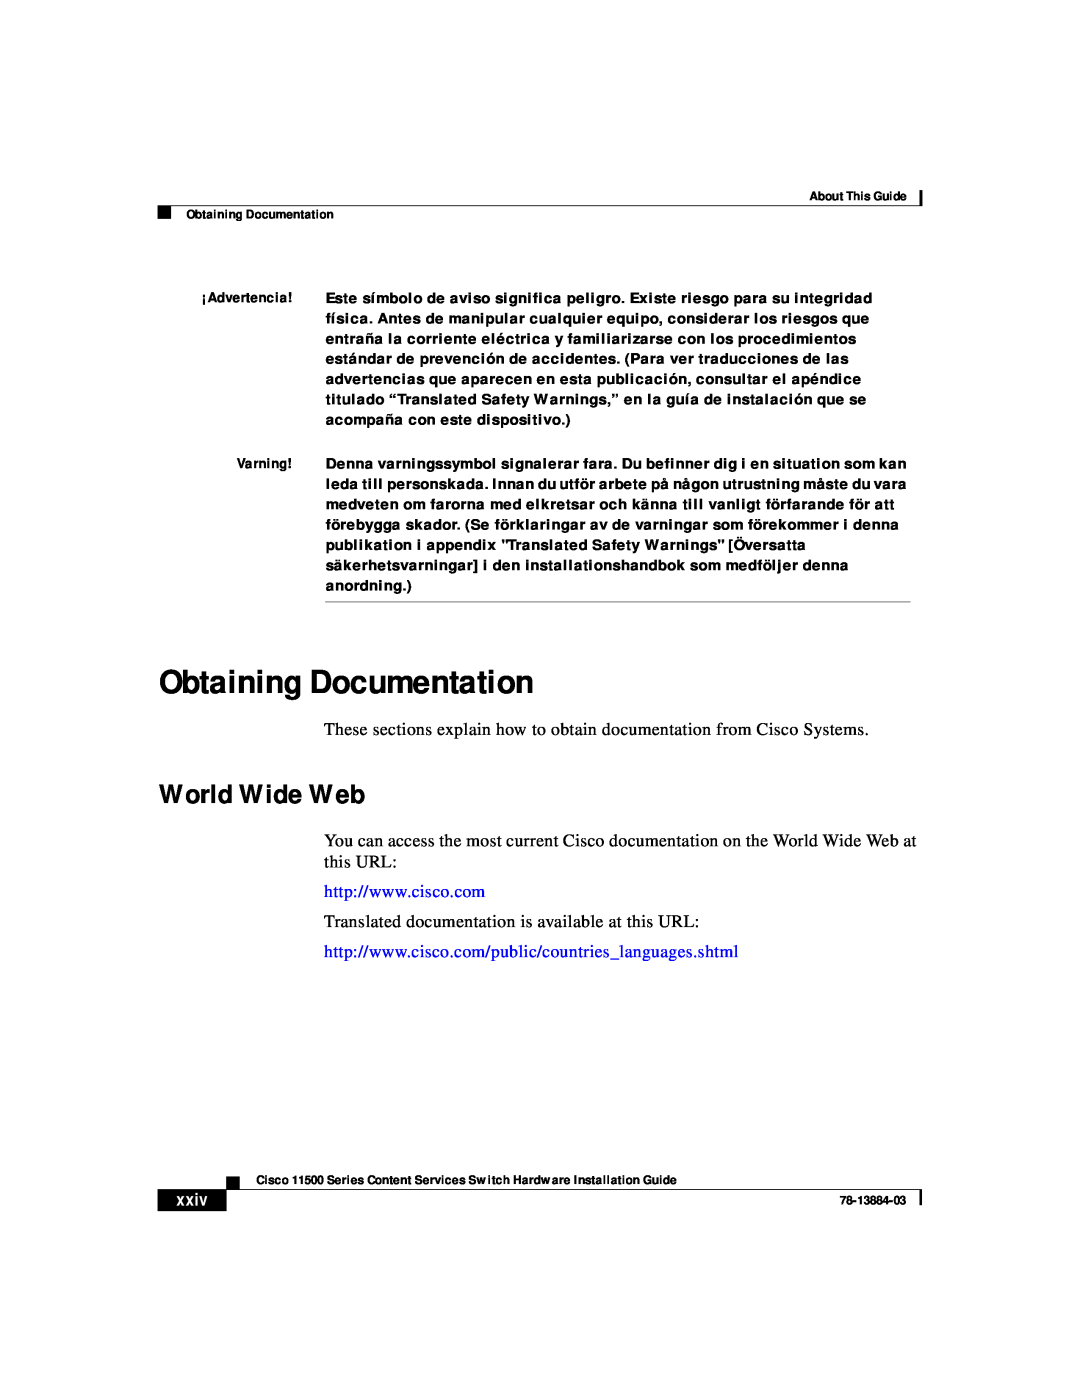 Cisco Systems 11500 Series manual Obtaining Documentation, World Wide Web, xxiv 